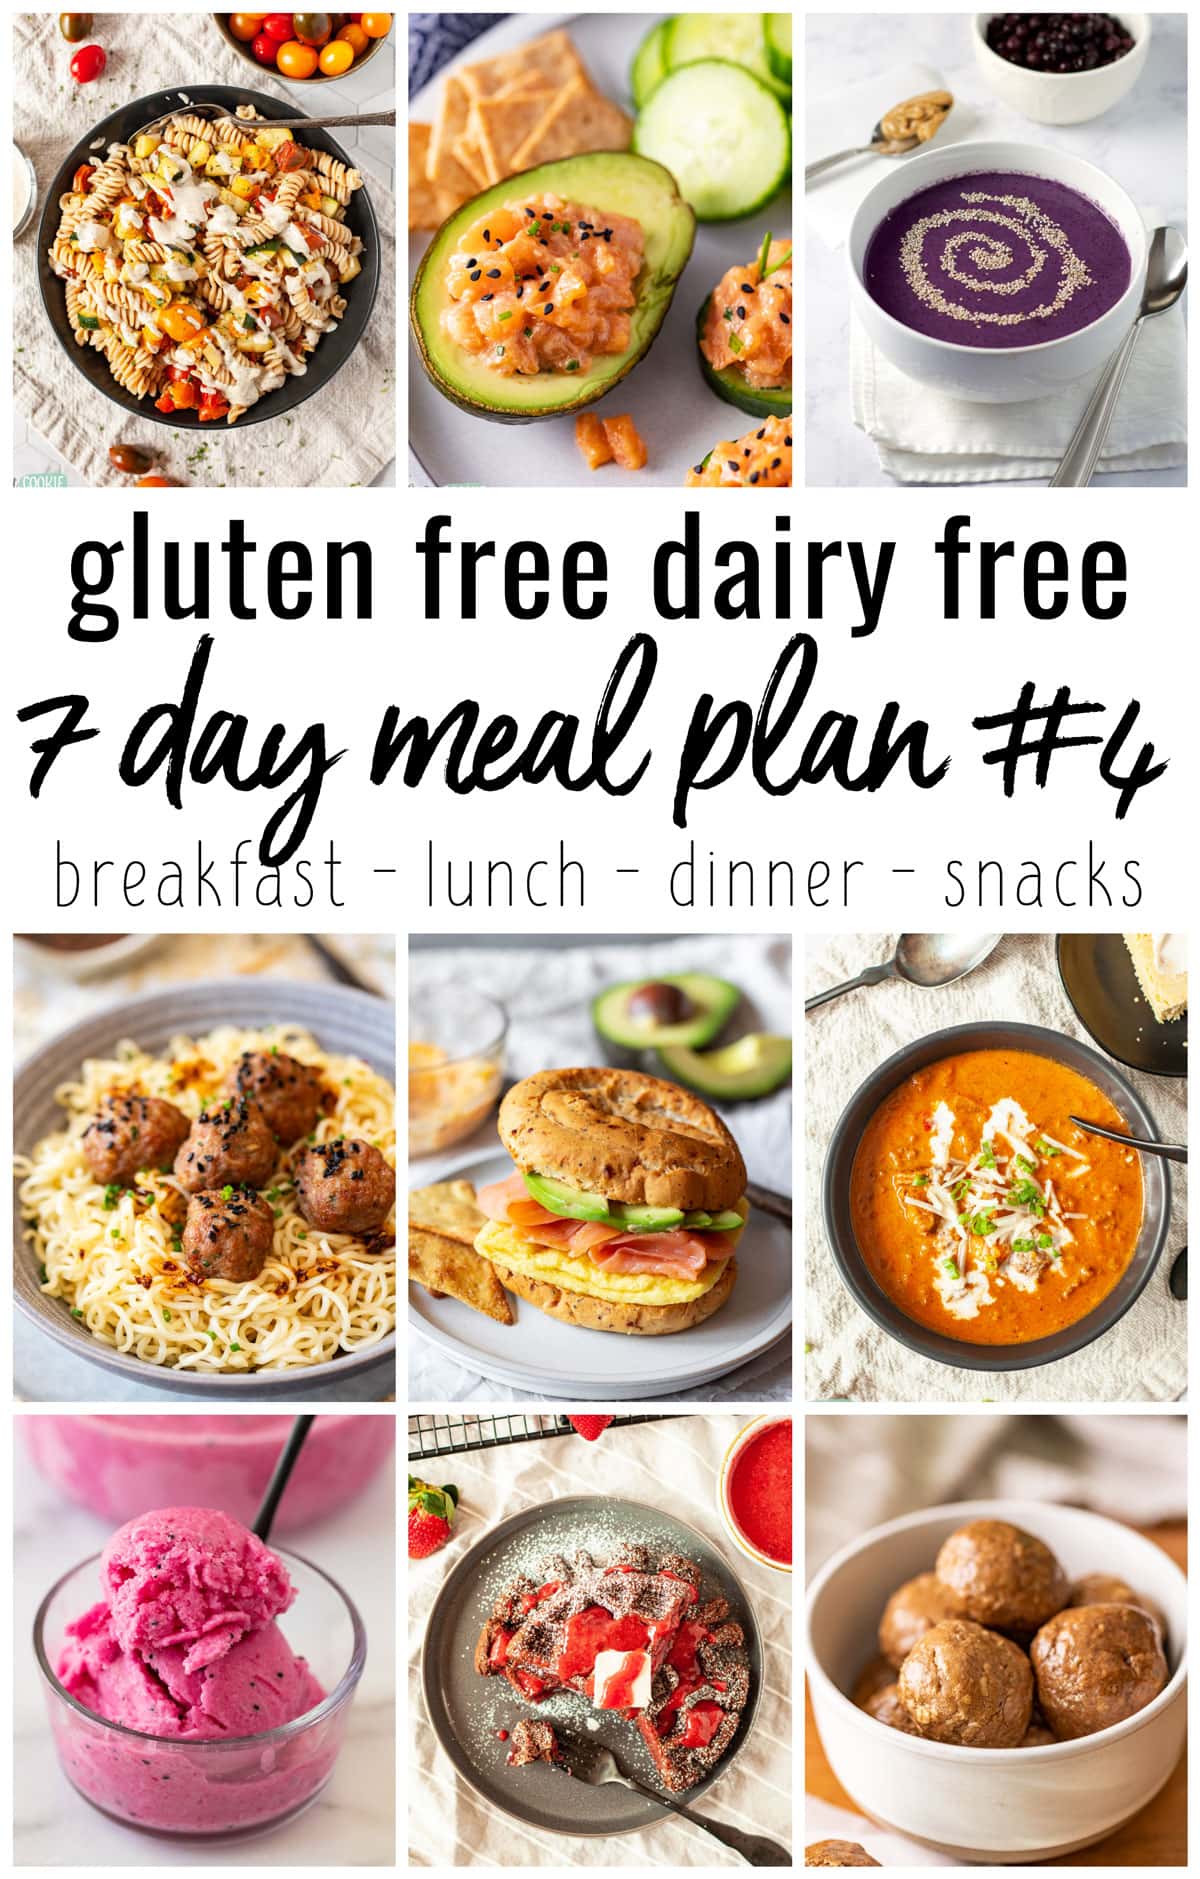 Gluten free 7 day meal plan.